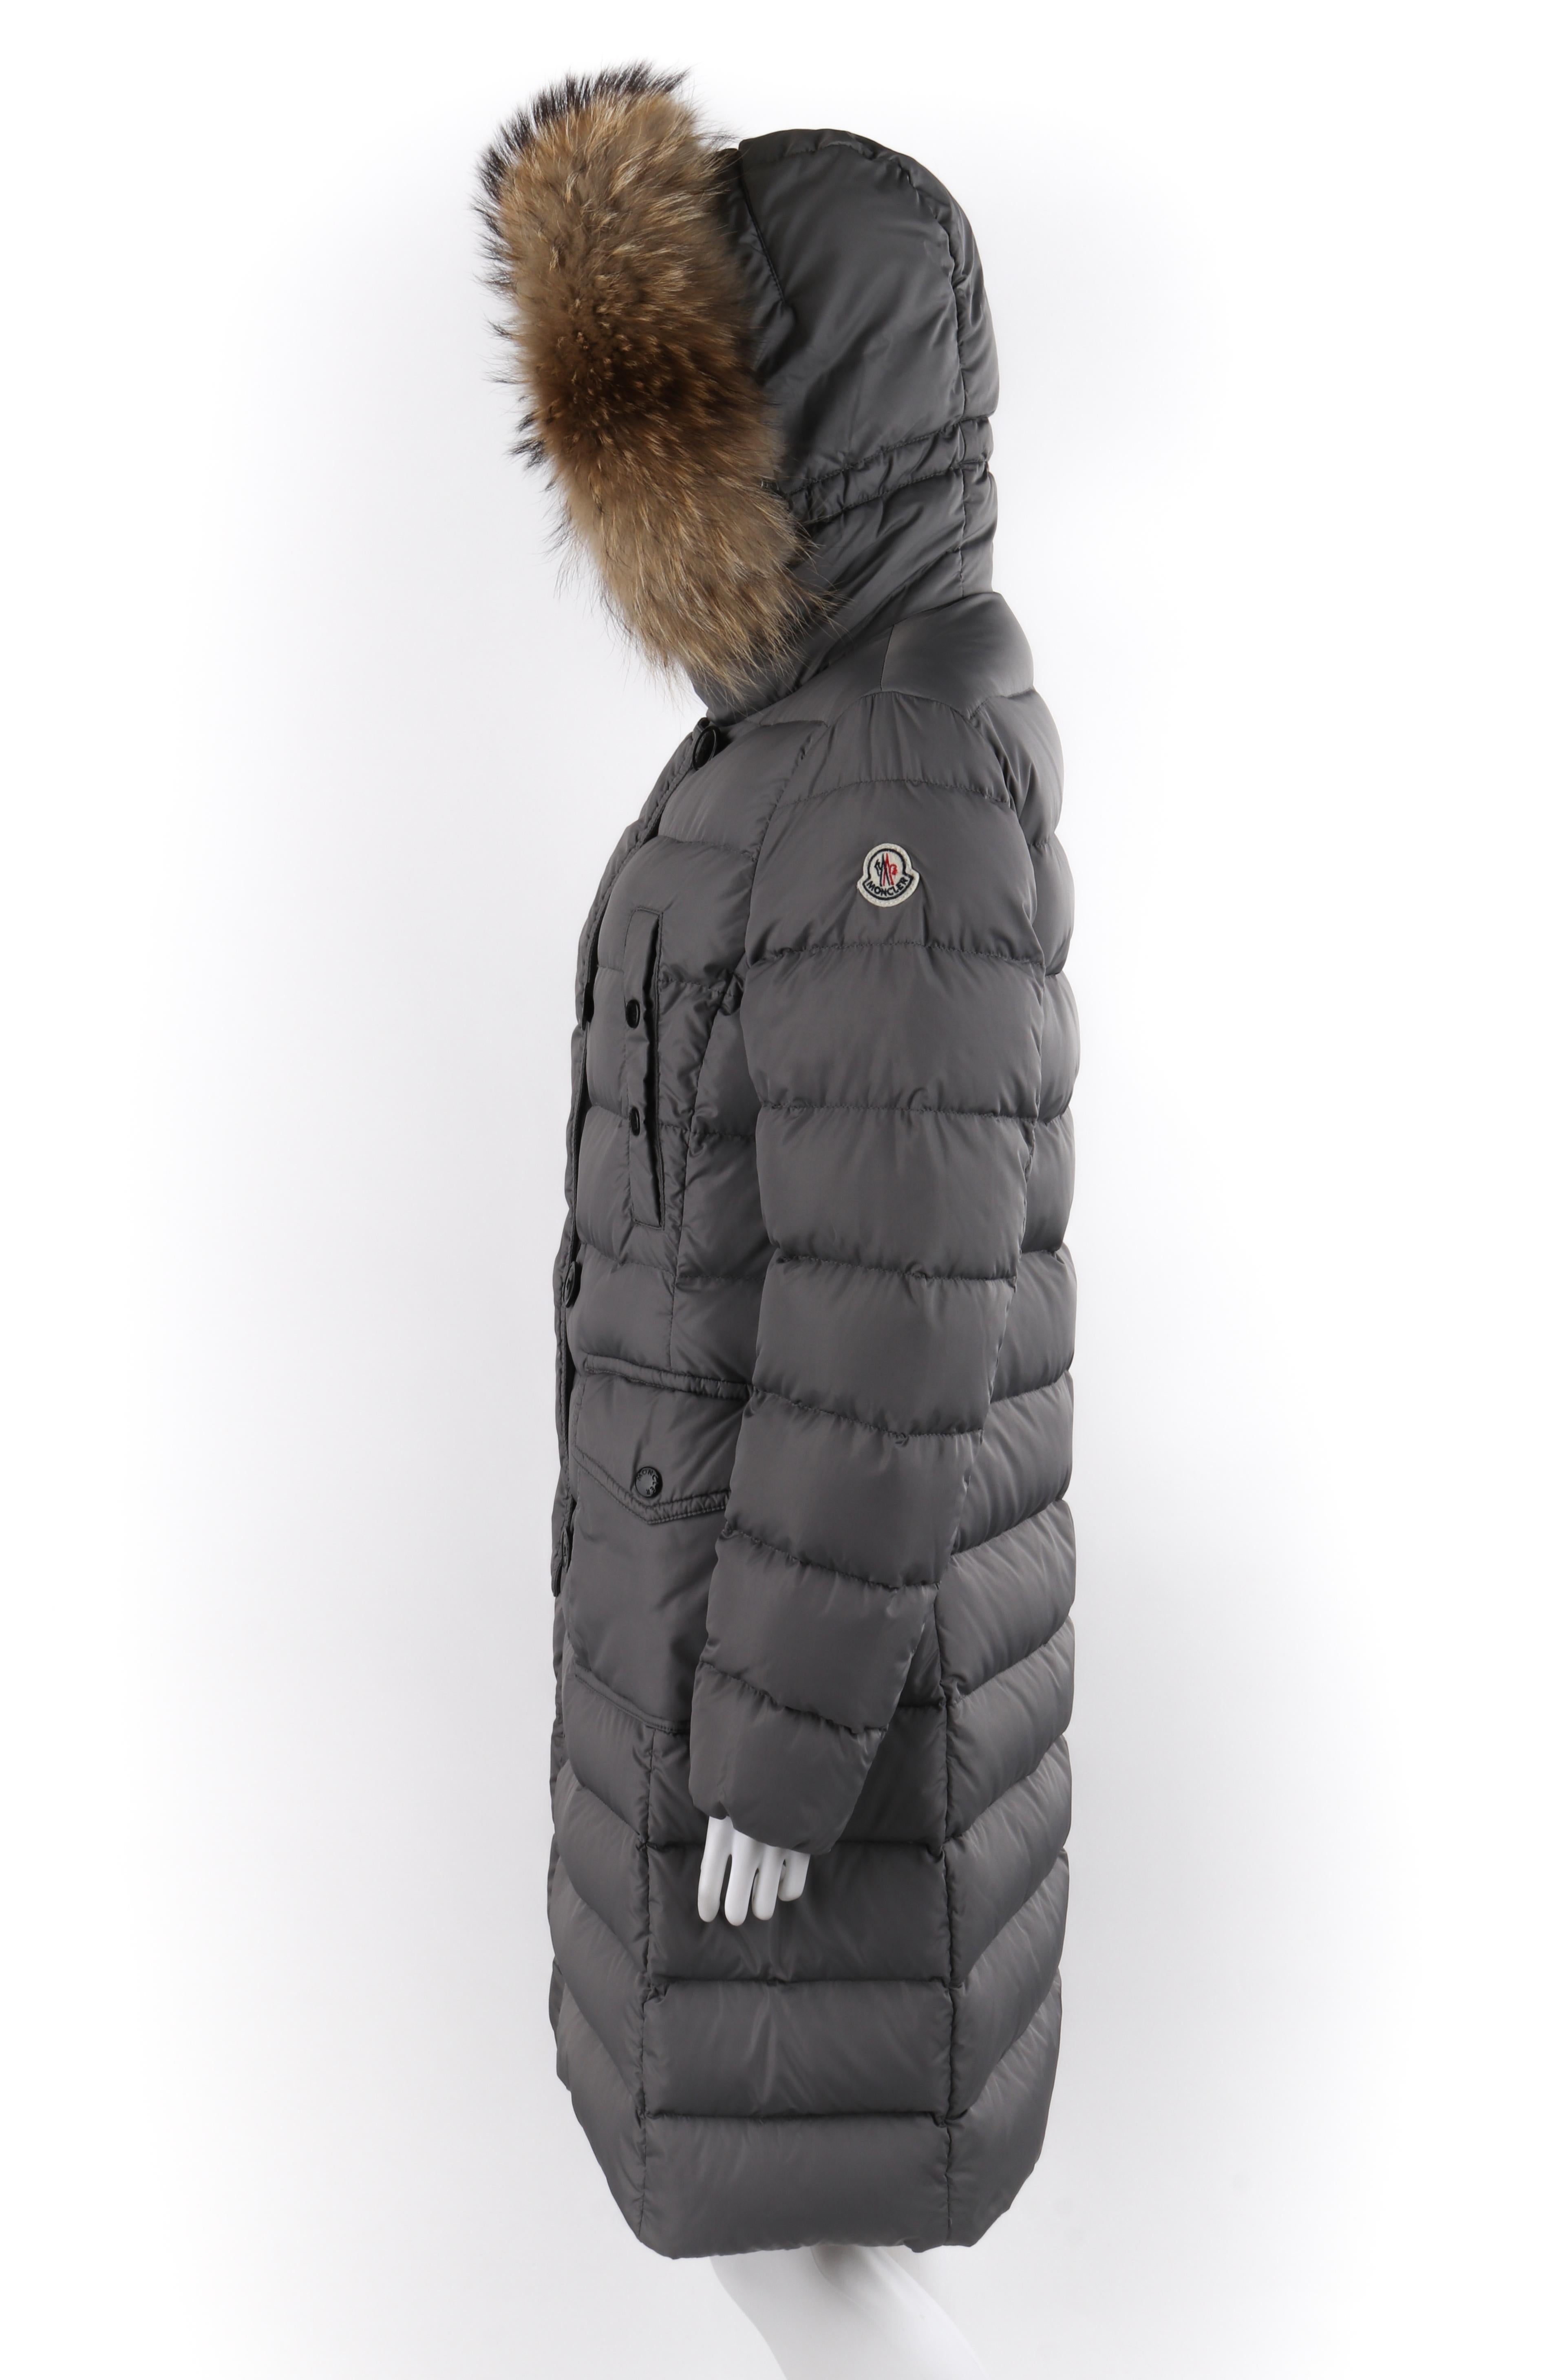 MONCLER “Genevrier” Giubbotto Gray Fur Quilted Puffer Jacket Parka Coat Size 